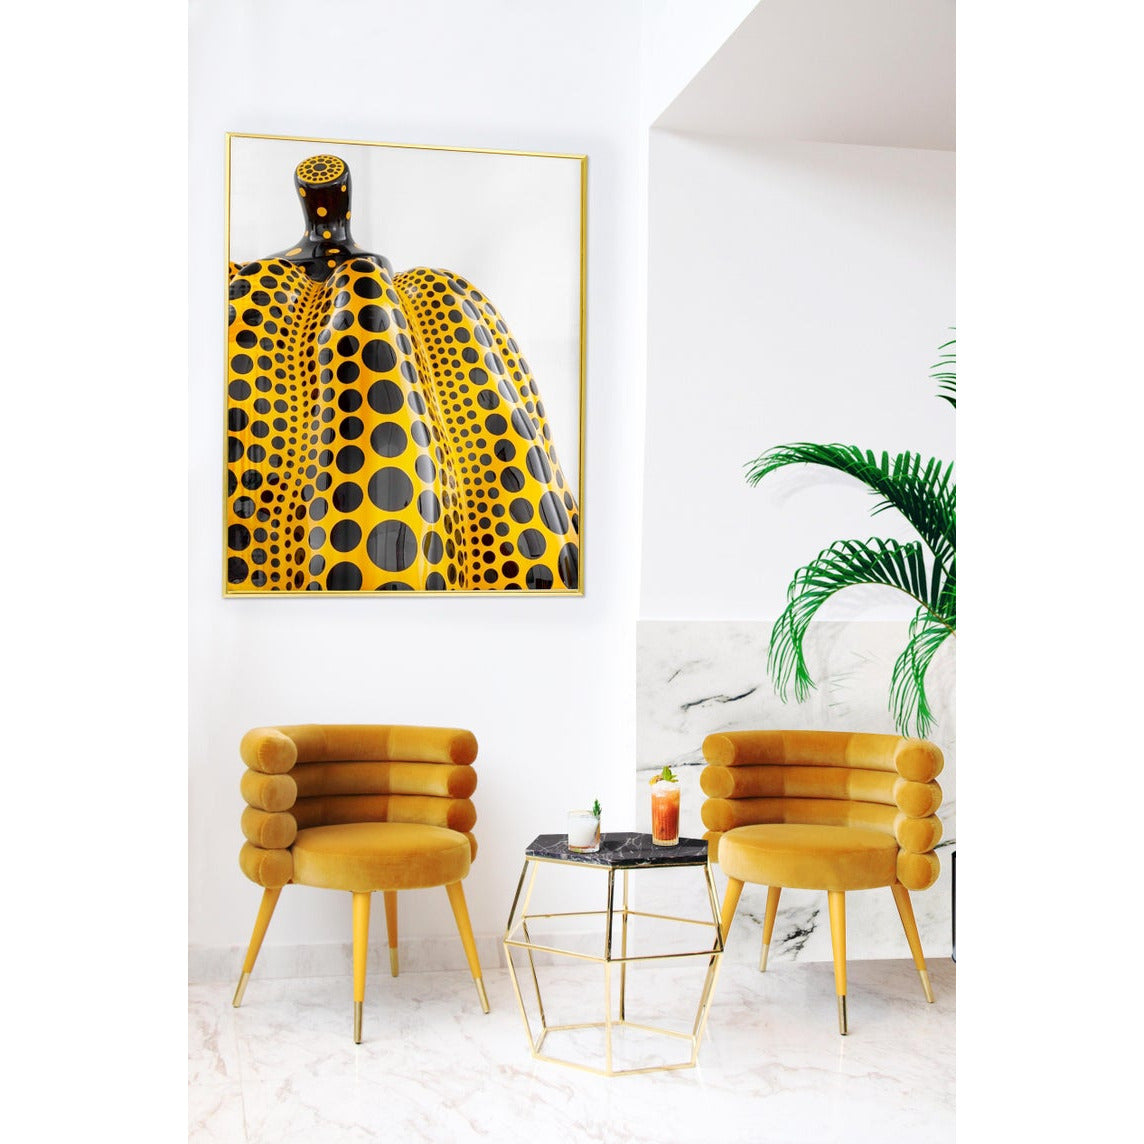 Set of 4 Grey Marshmallow Dining Chairs, Royal Stranger | Modern Furniture + Decor